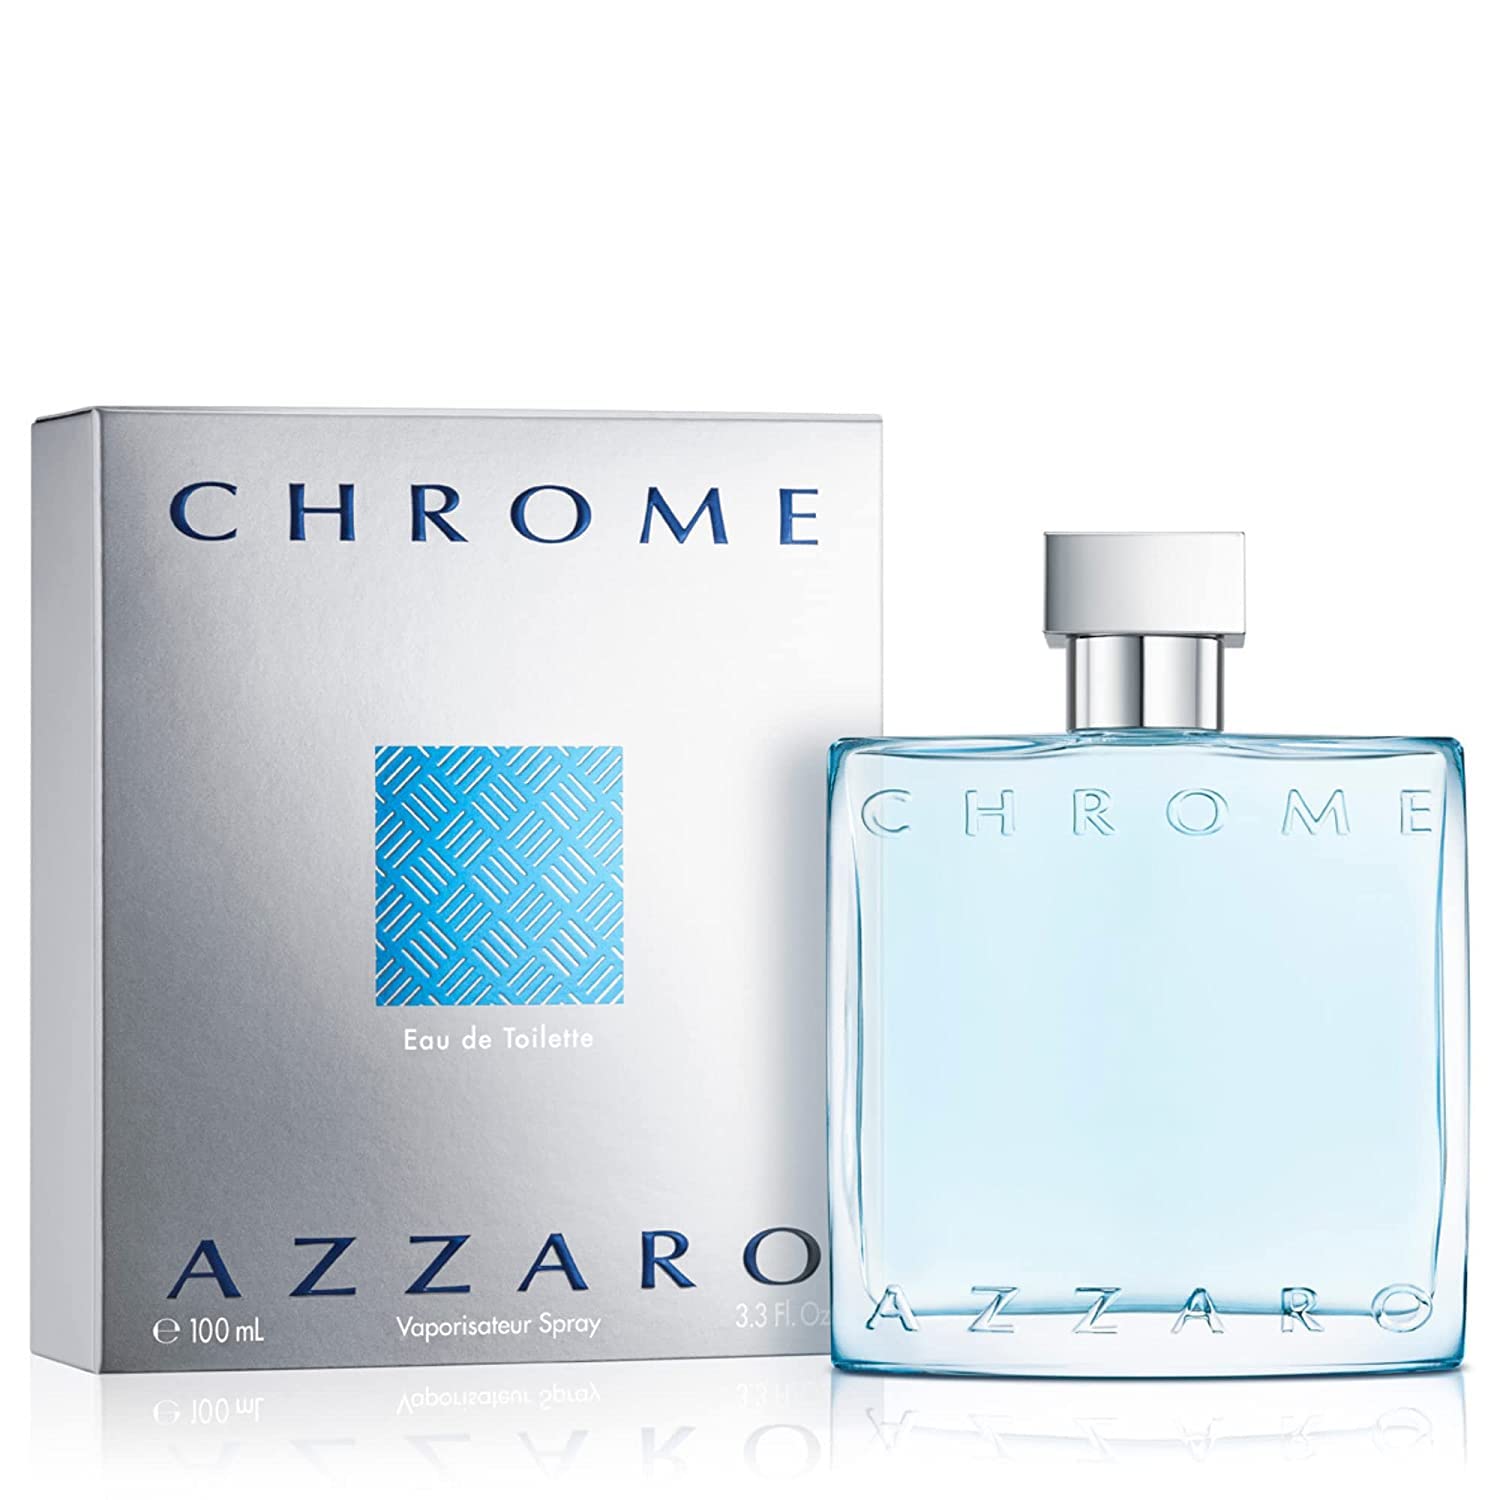 Azzaro Chrome Eau de Toilette - Fresh Aquatic Mens Cologne - Citrus, Woody, Musky Fragrance -Fresh Notes of Bergamot - Everyday Wear - Classic Summer Beach Scent - Luxury Perfumes for Men